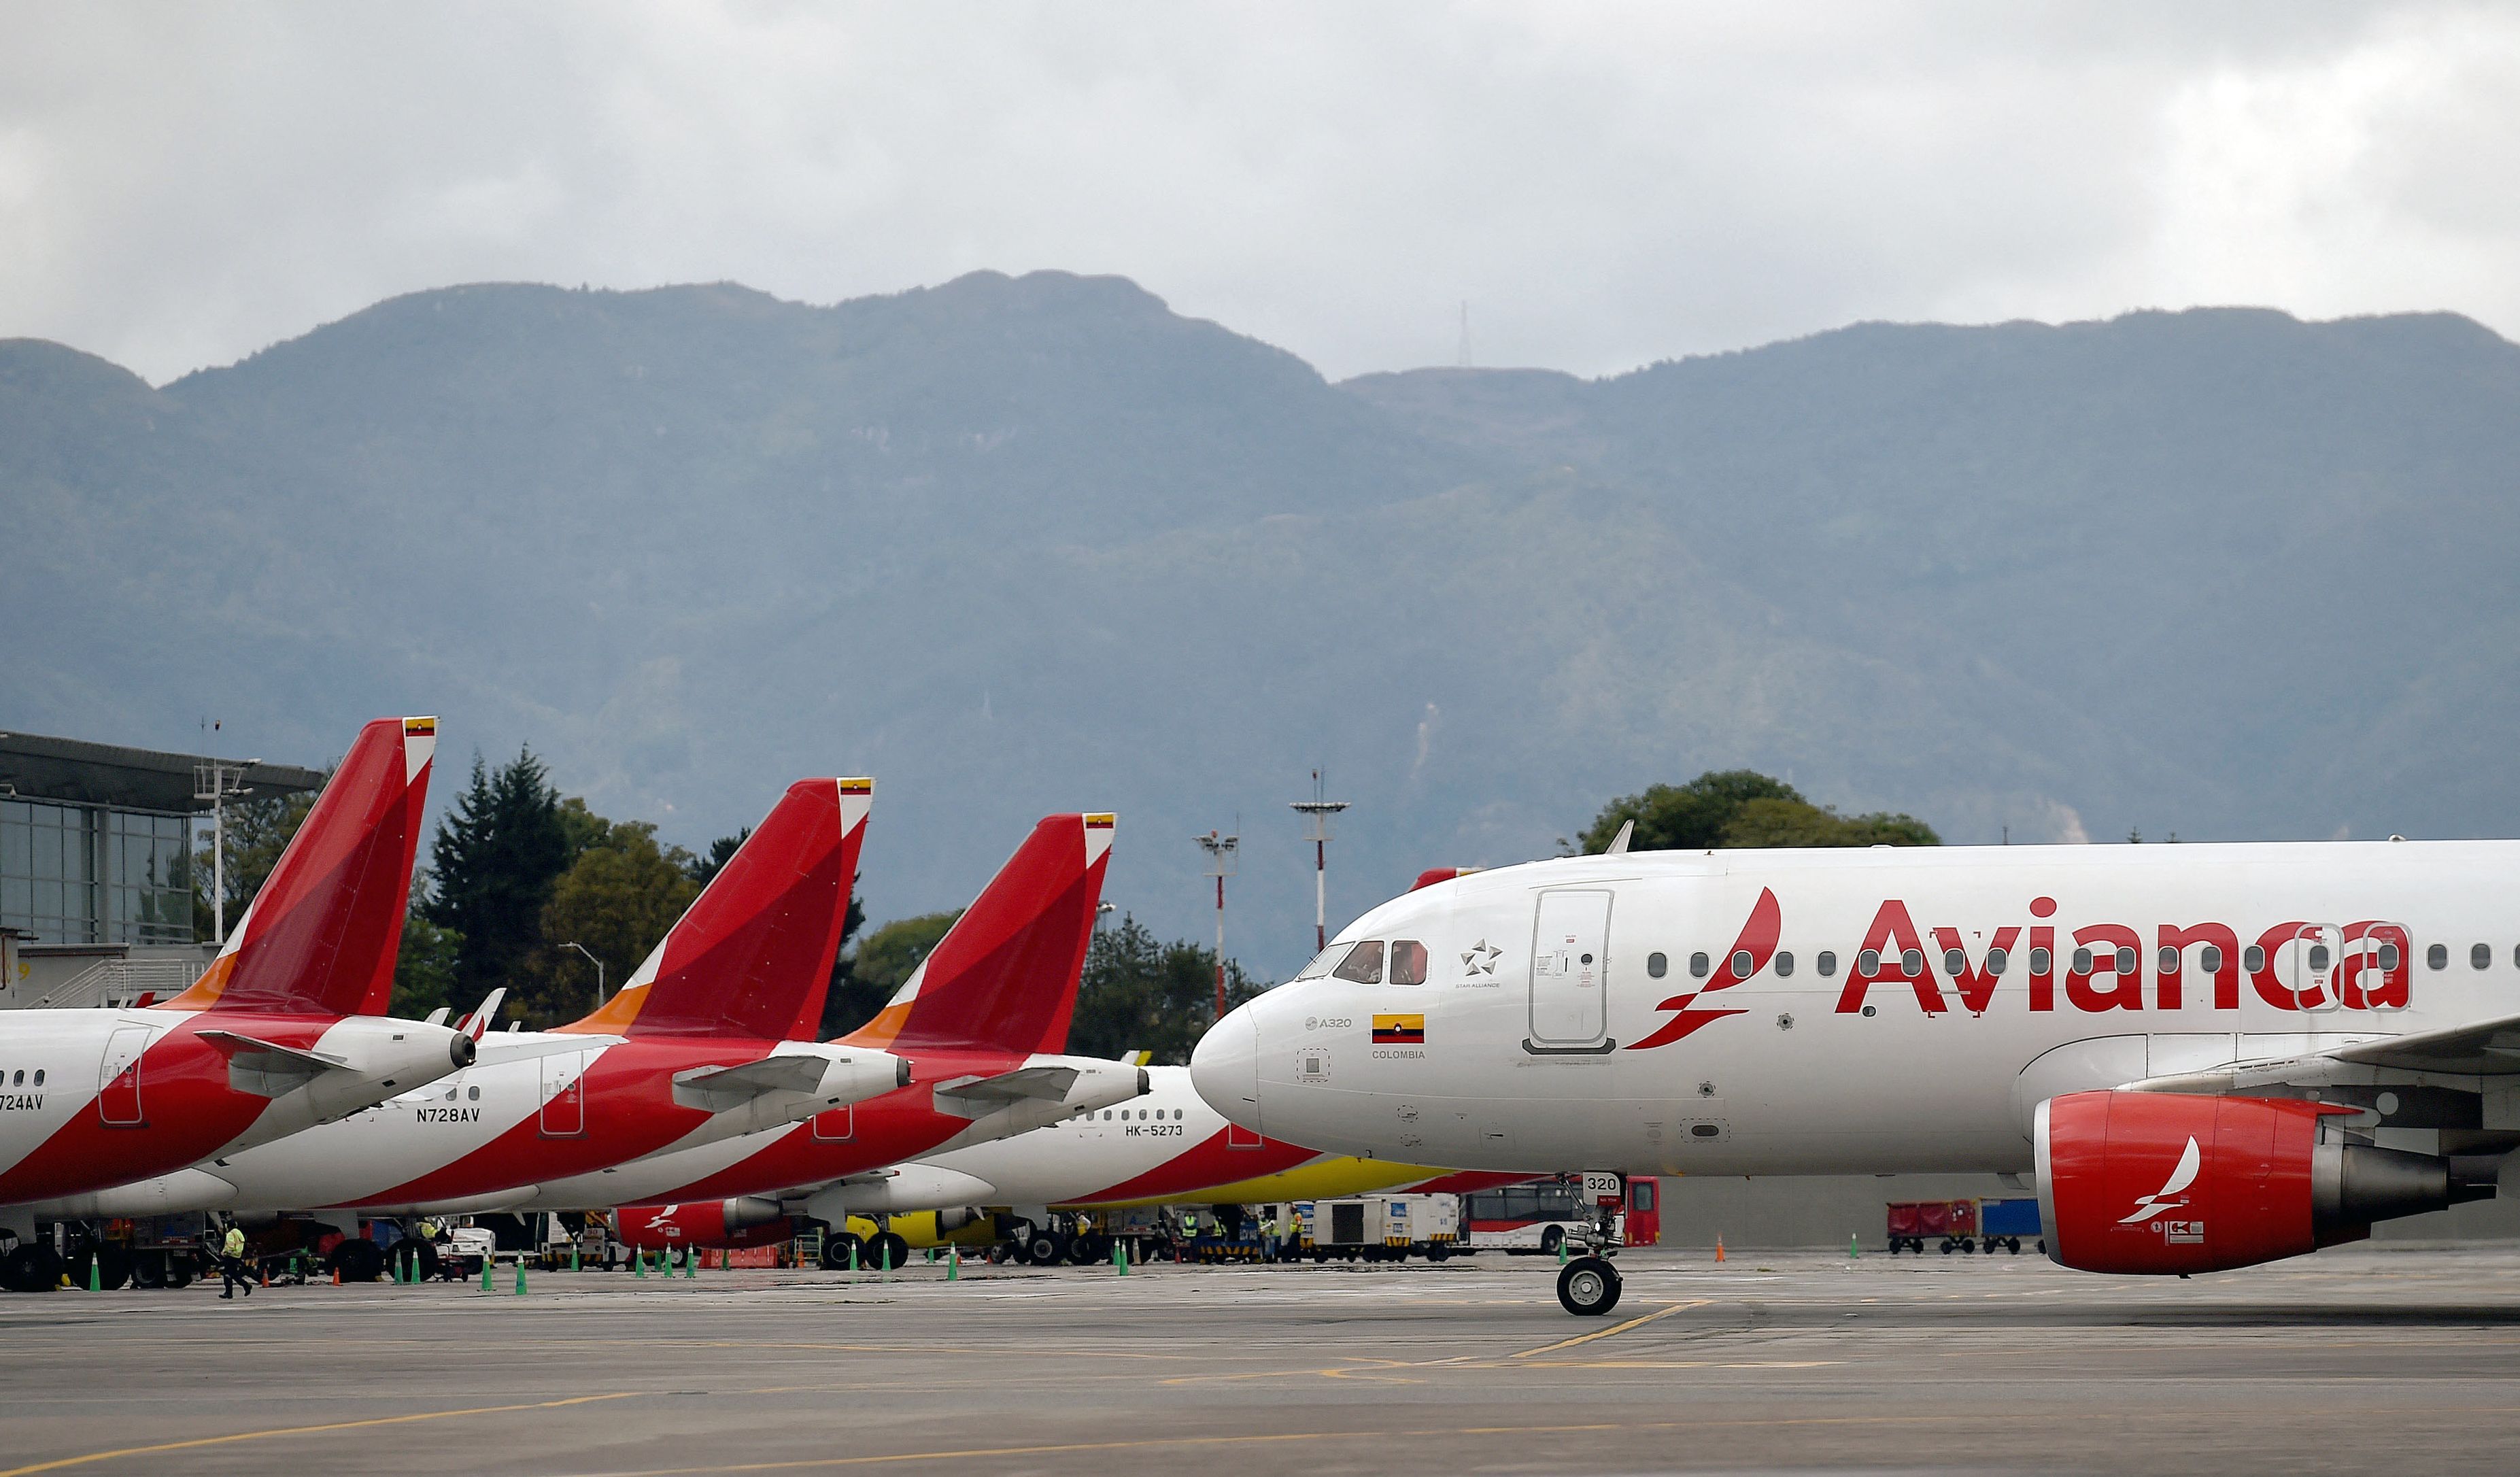 Several Avianca aircraft